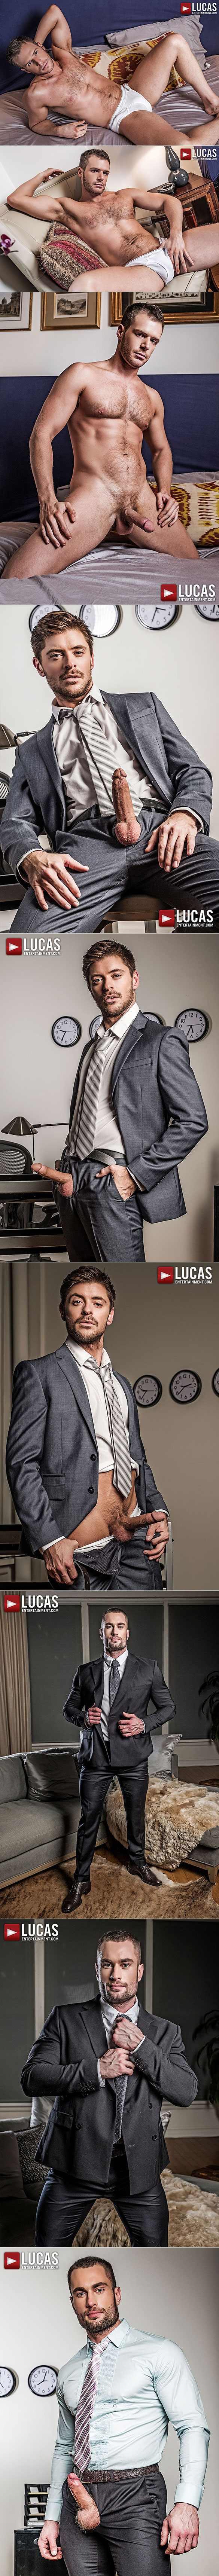 Lucas Entertainment: Stas Landon and Jack Andy double penetrate Brian Bonds in "Gentlemen 19: Hard At Work"